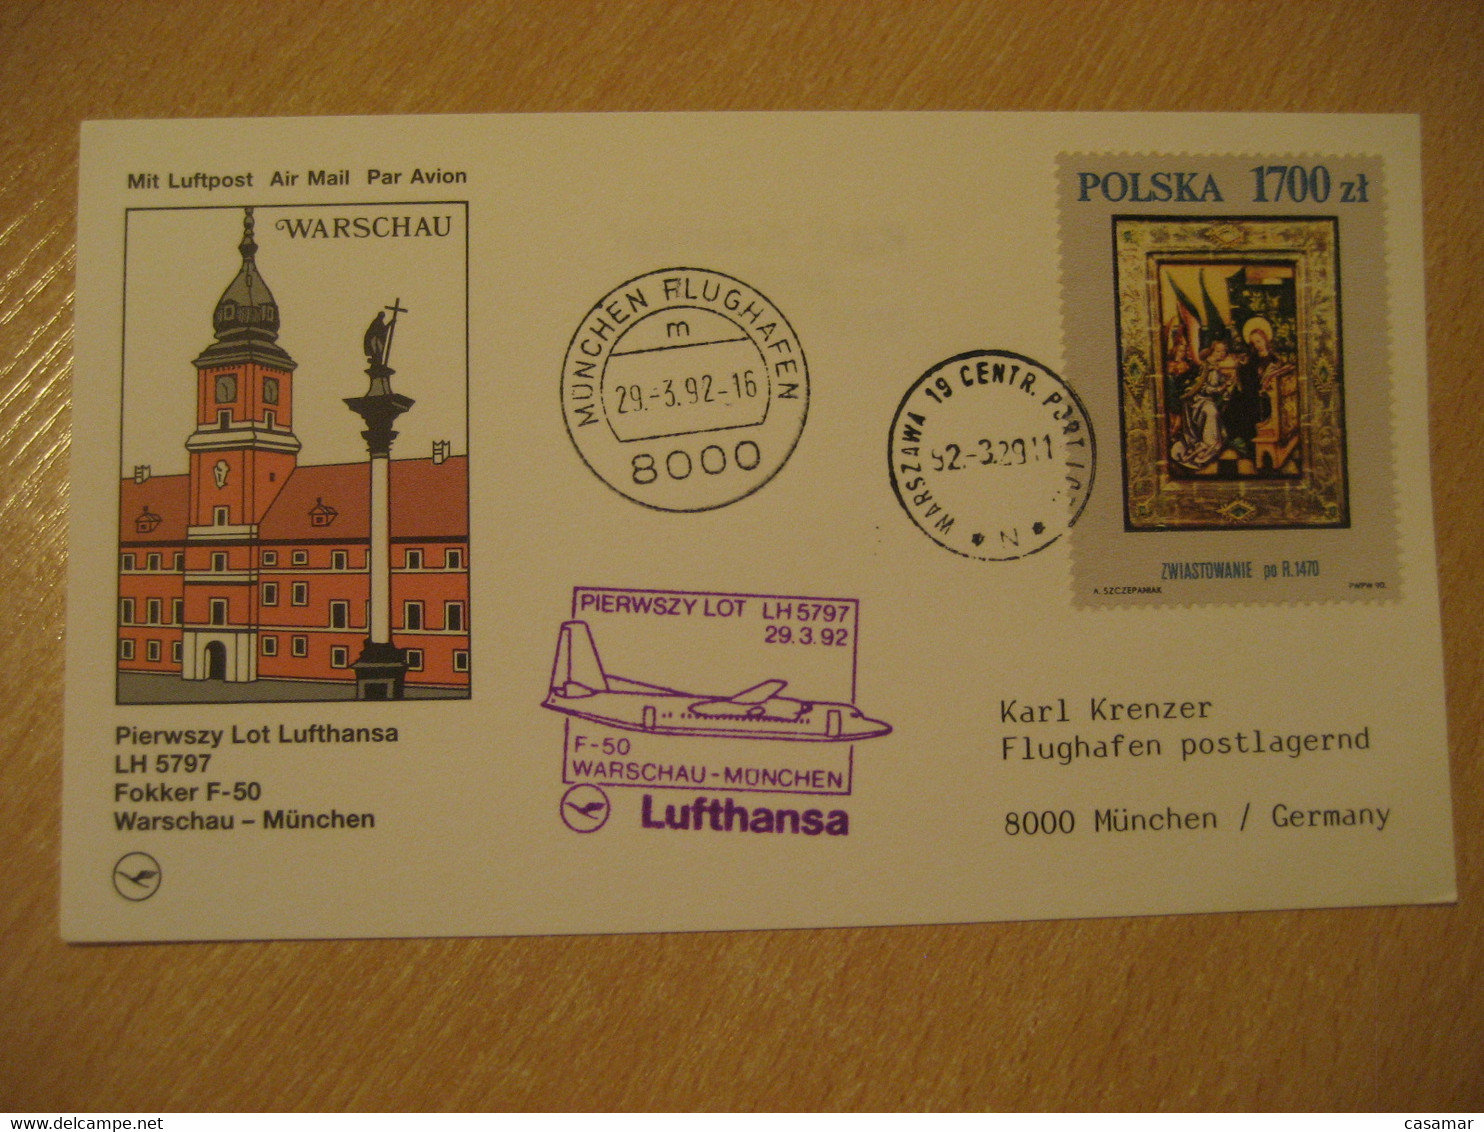 WARSZAWA Warsaw Munich 1992 Lufthansa Airlines Airline Fokker F-50 First Flight Violet Cancel Card POLAND GERMANY - Flugzeuge